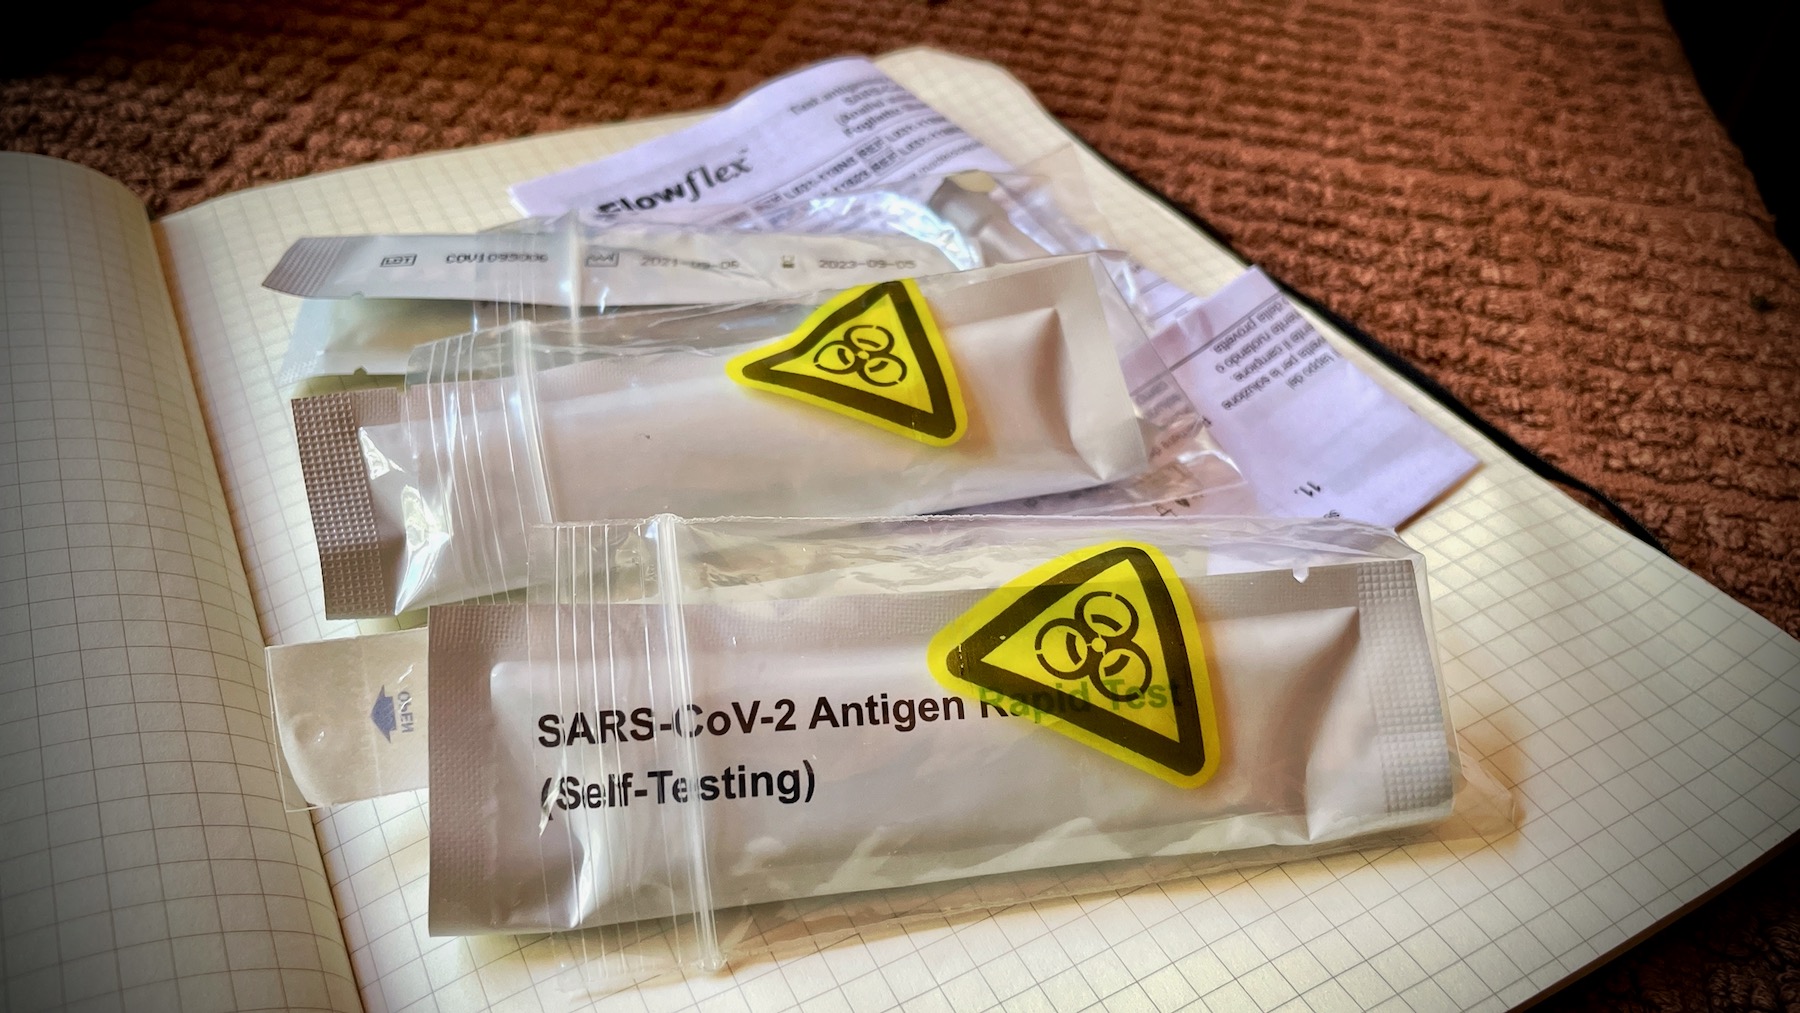 SARS-CoV-2 Antigen Rapid Tests